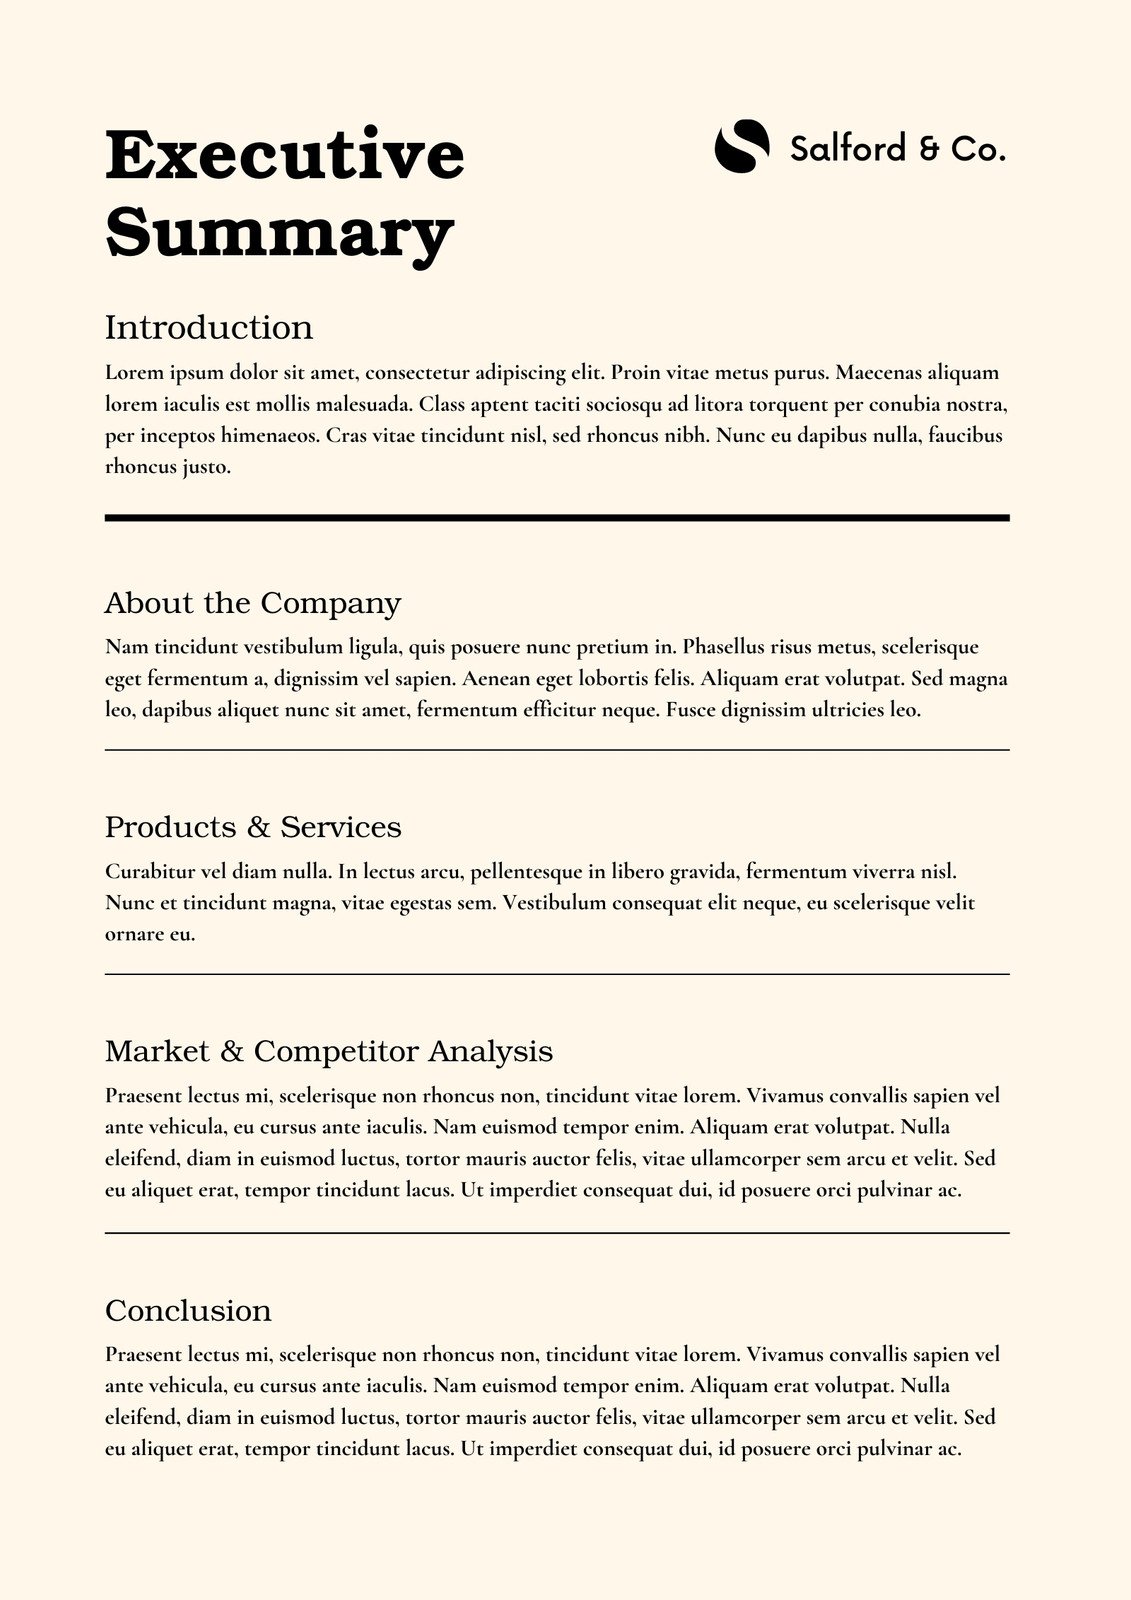 executive summary photography business plan